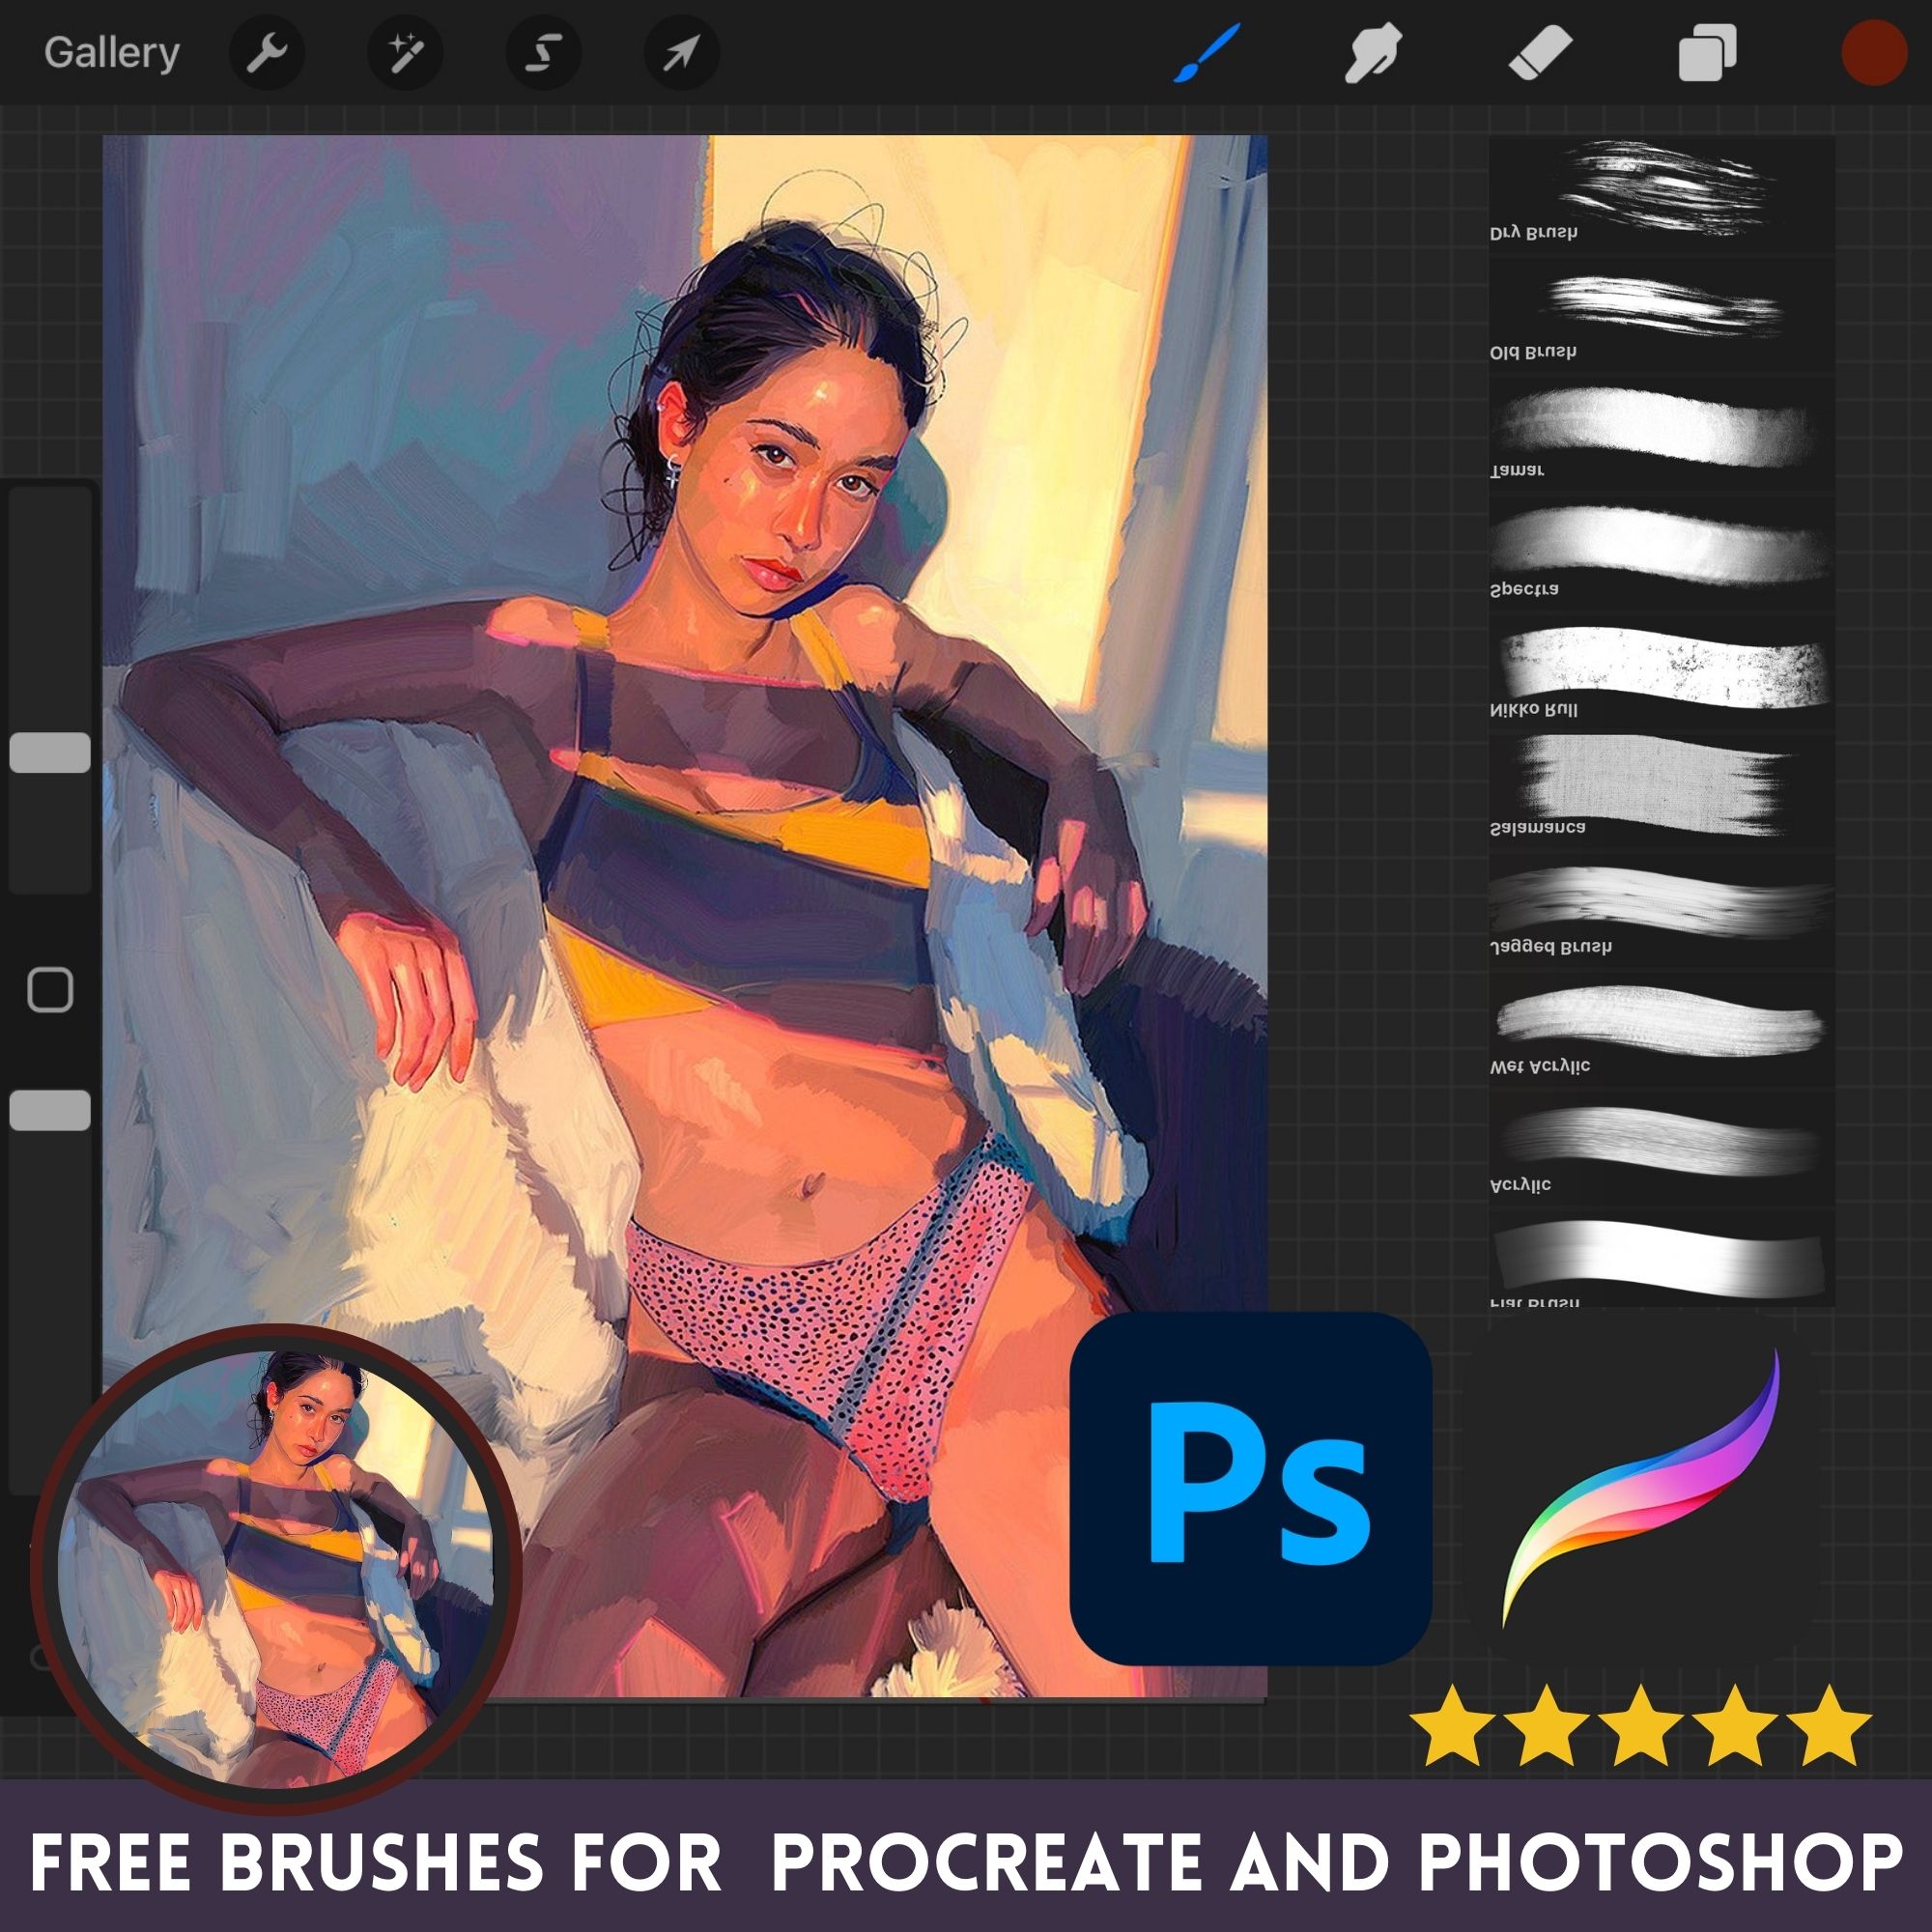 Free Brushes For Procreate and Photoshop